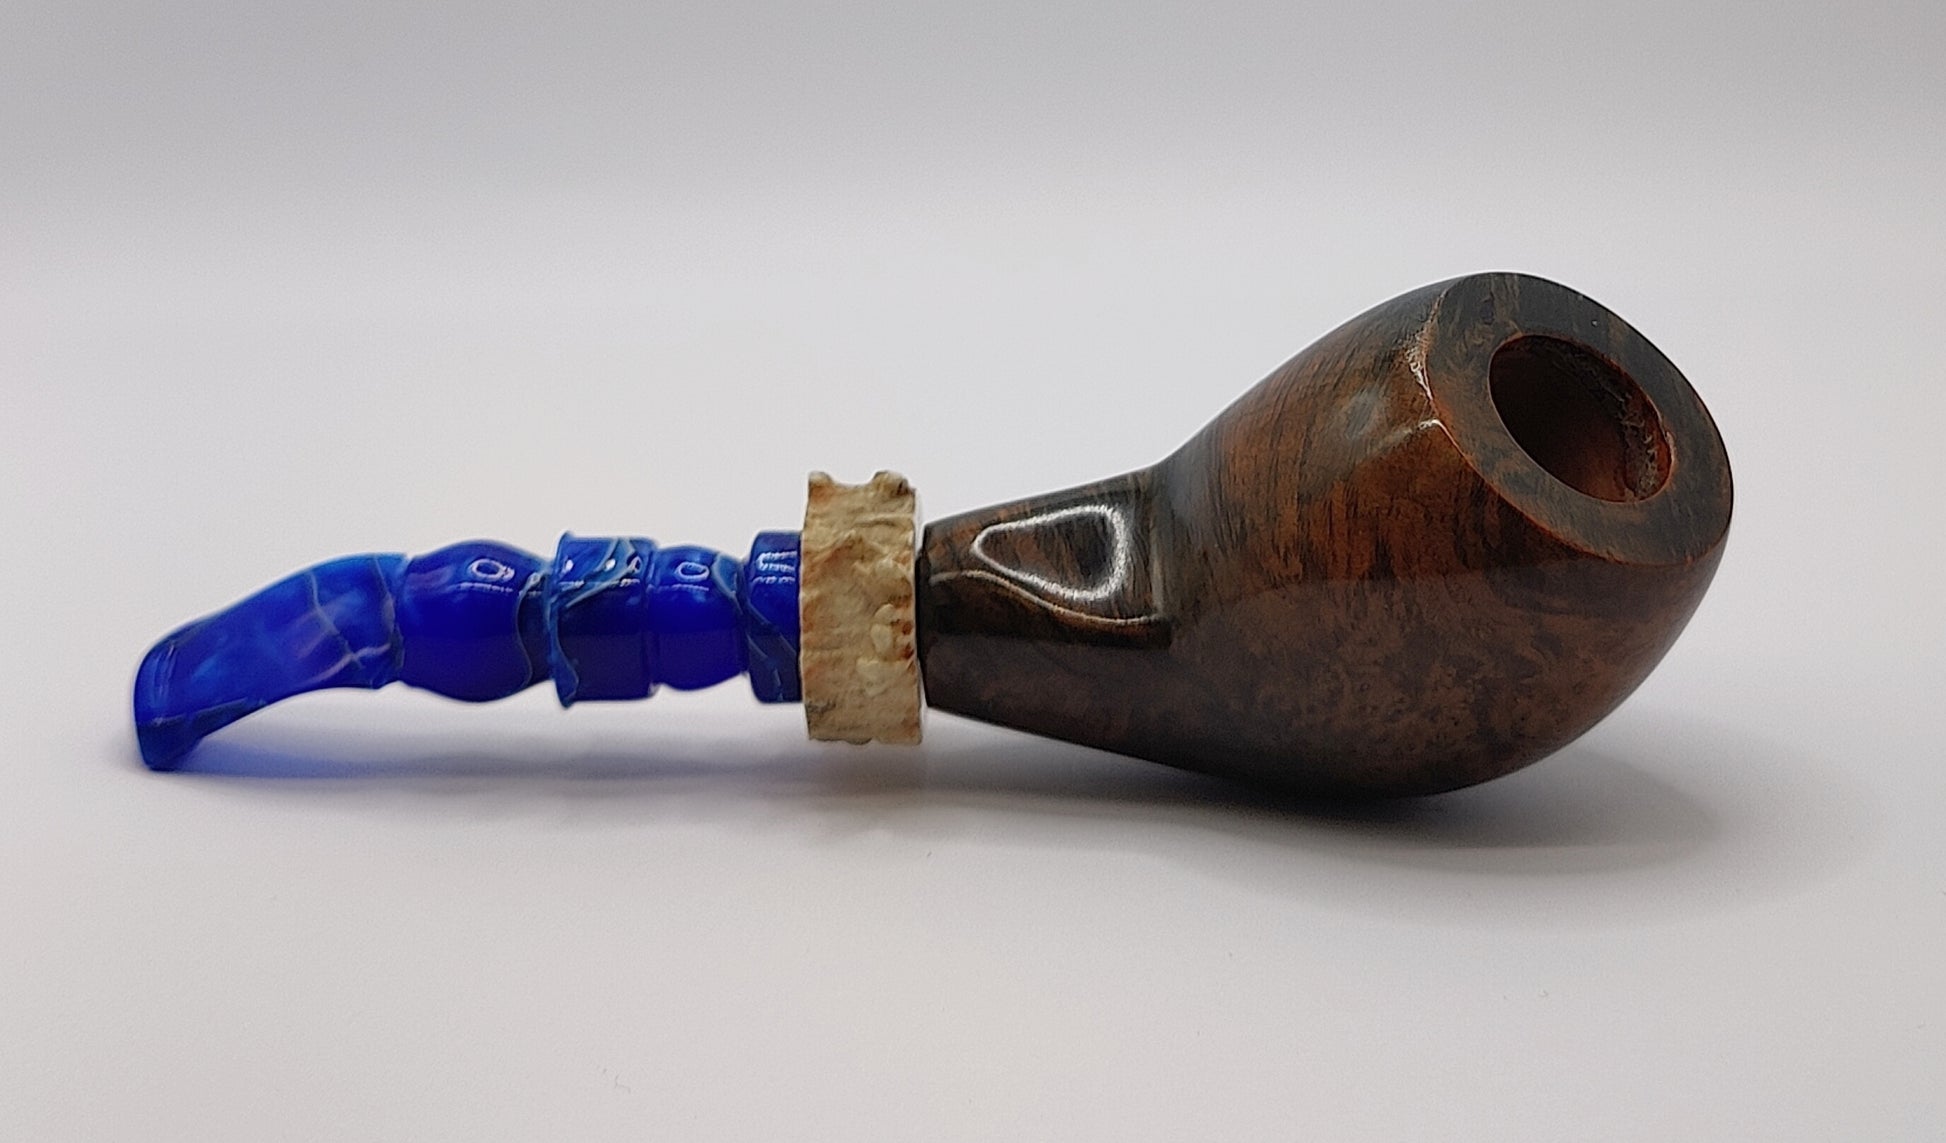 The blue bone, tobacco pipe - Afterburner Cigar store